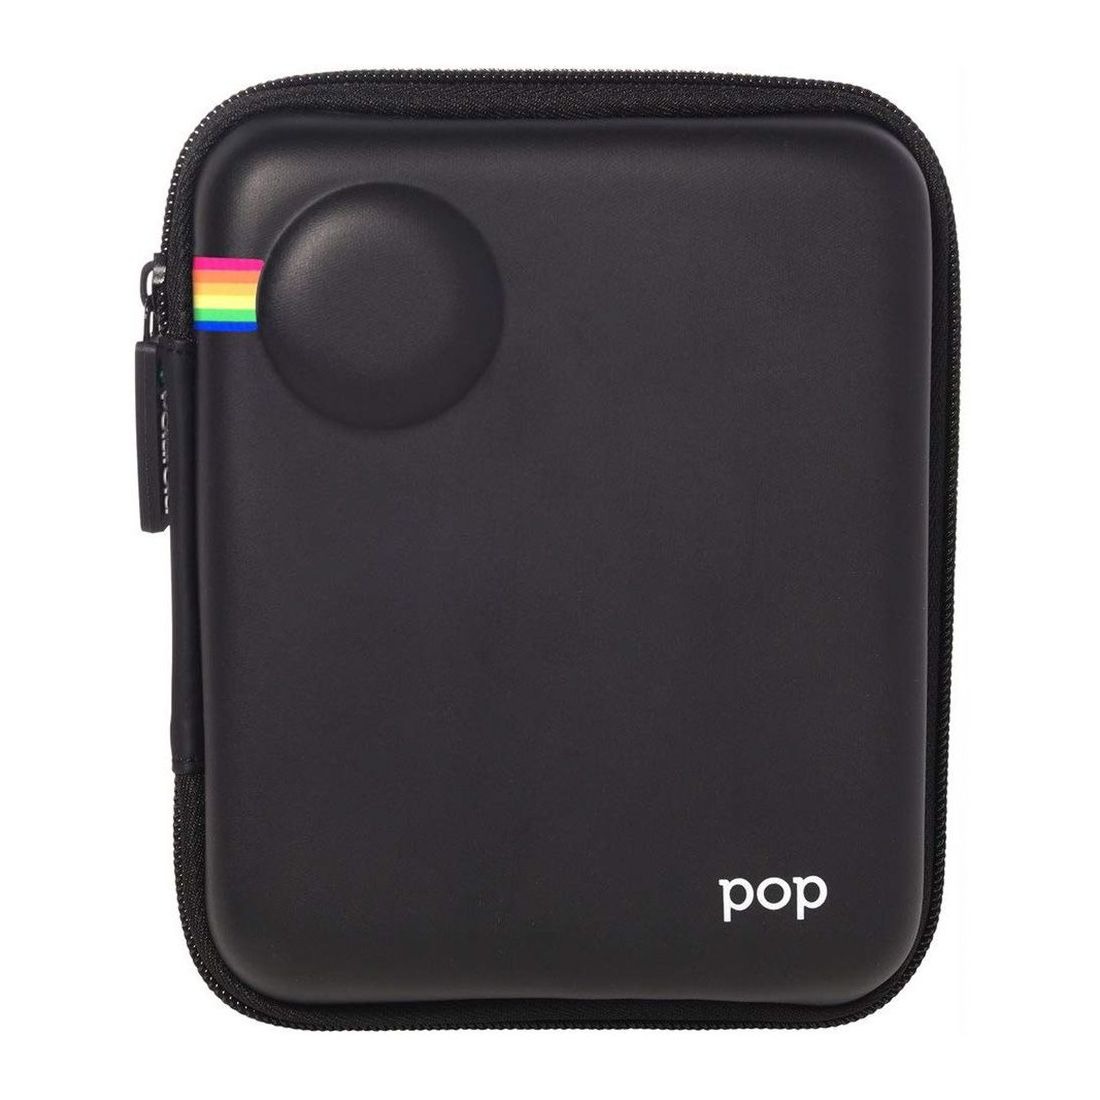 Polaroid Pop Instant Digital Camera Black + Polaroid Snap for Smartphones